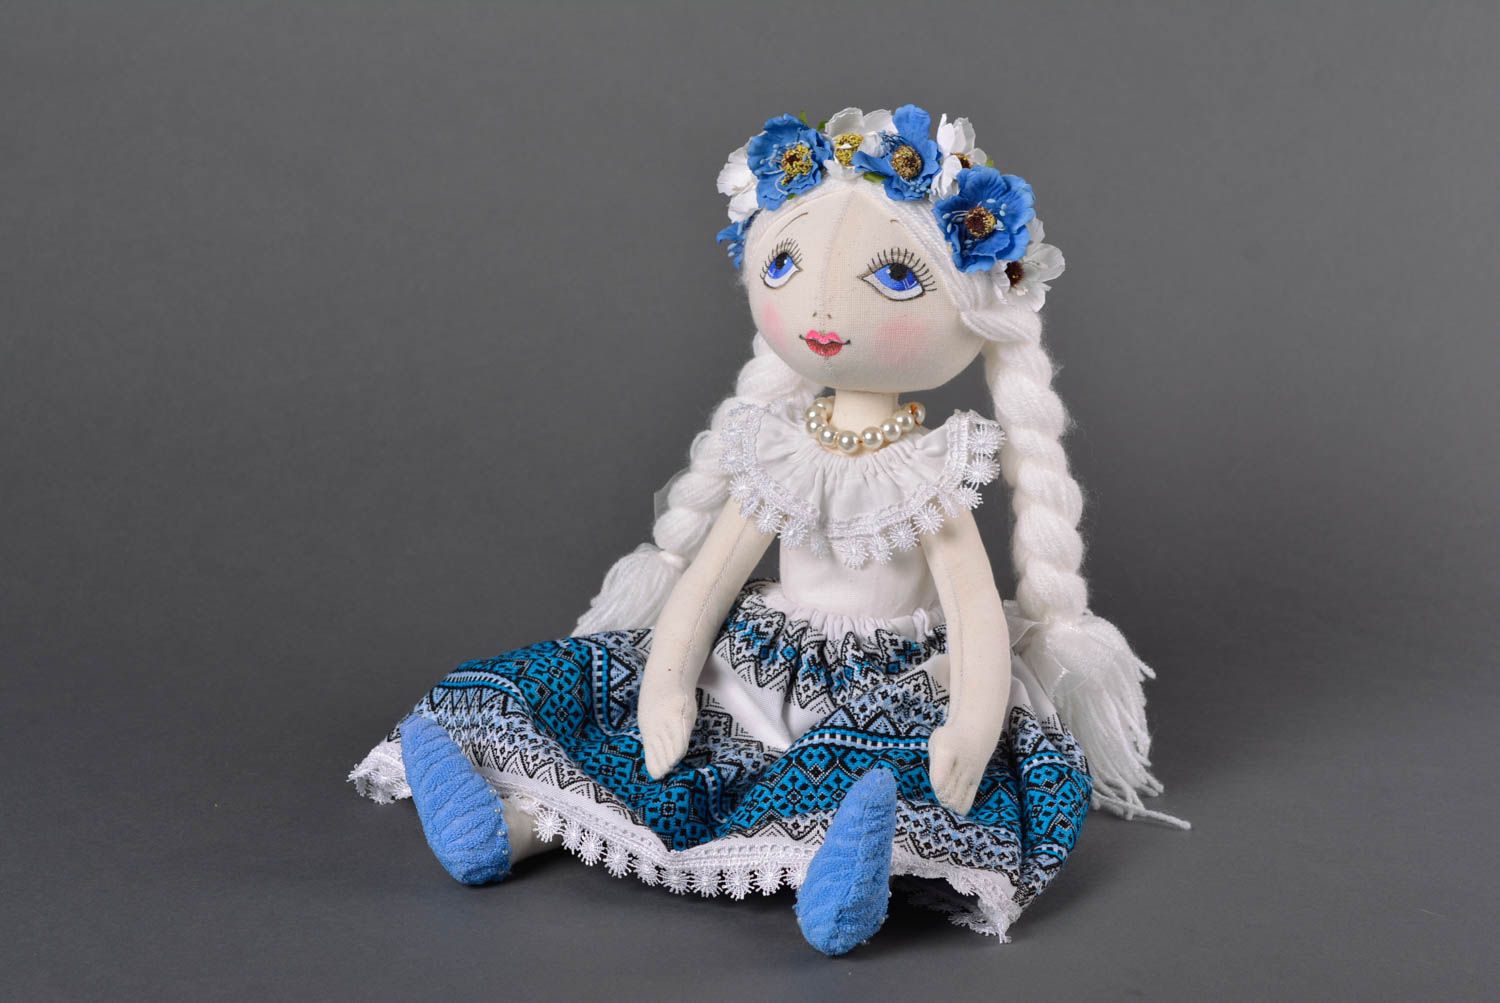 Handmade doll unusual toy for girls interior toy designer doll decor ideas photo 1